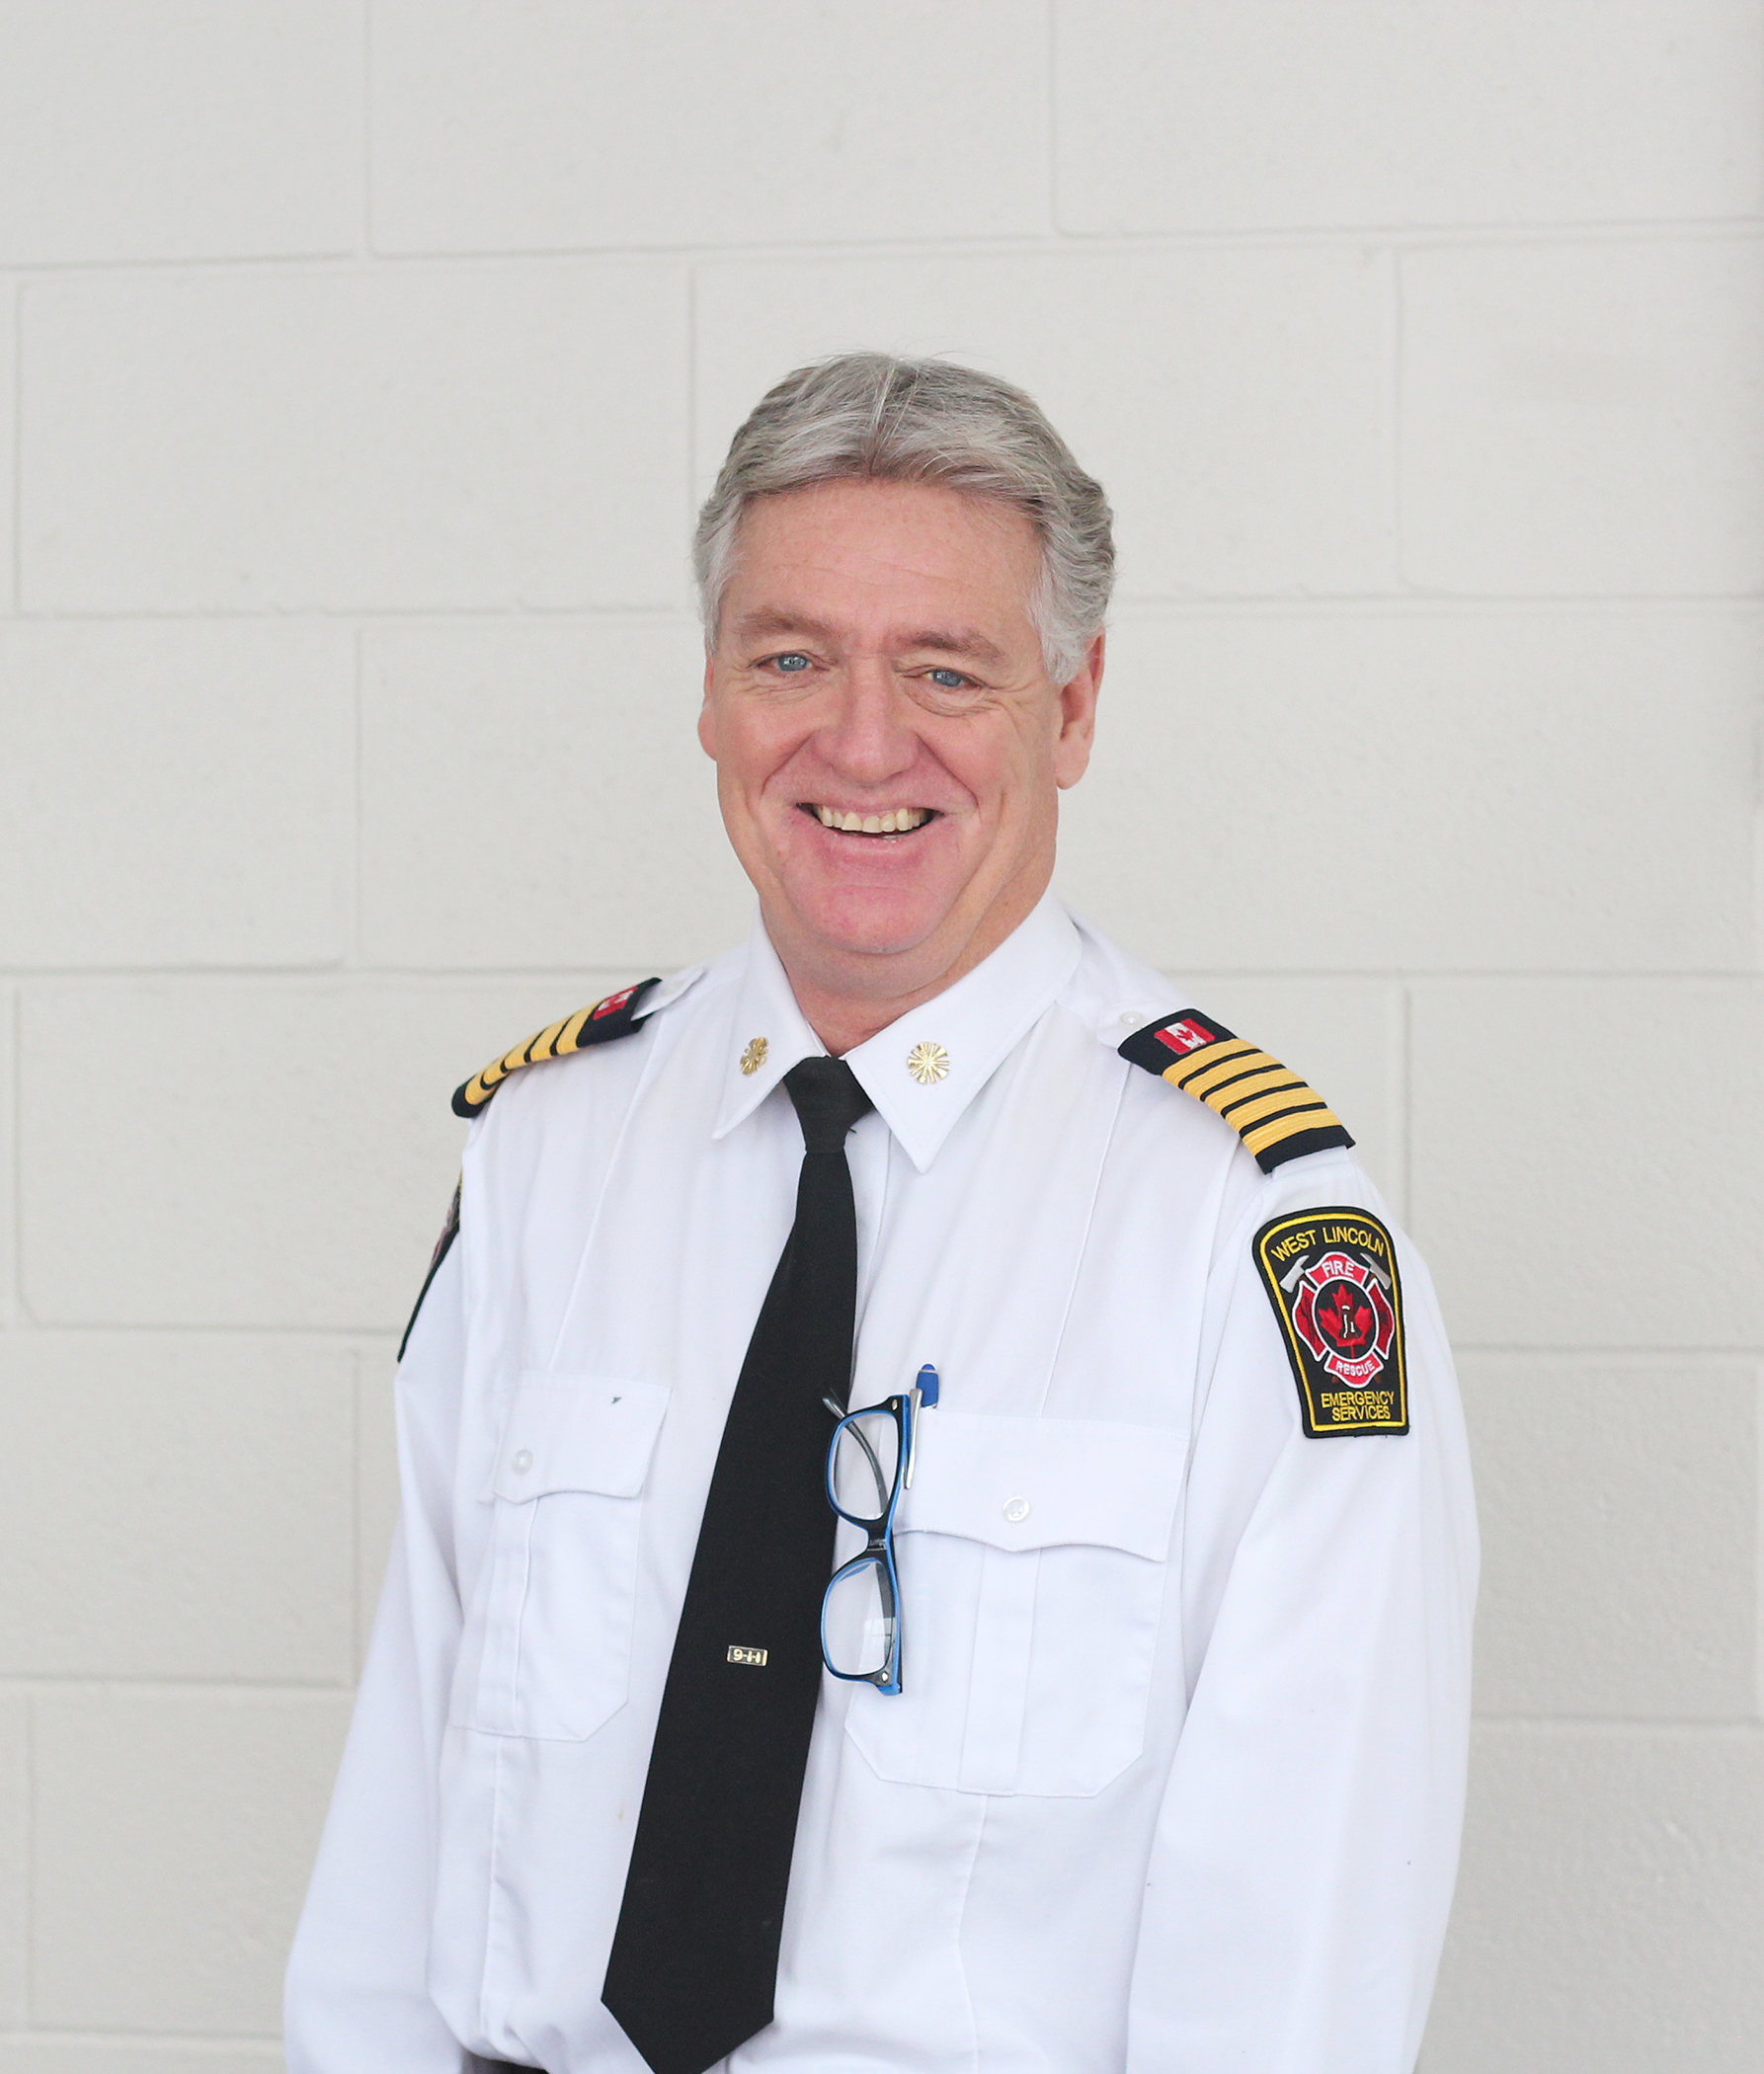 Dennis Fisher, Fire Chief